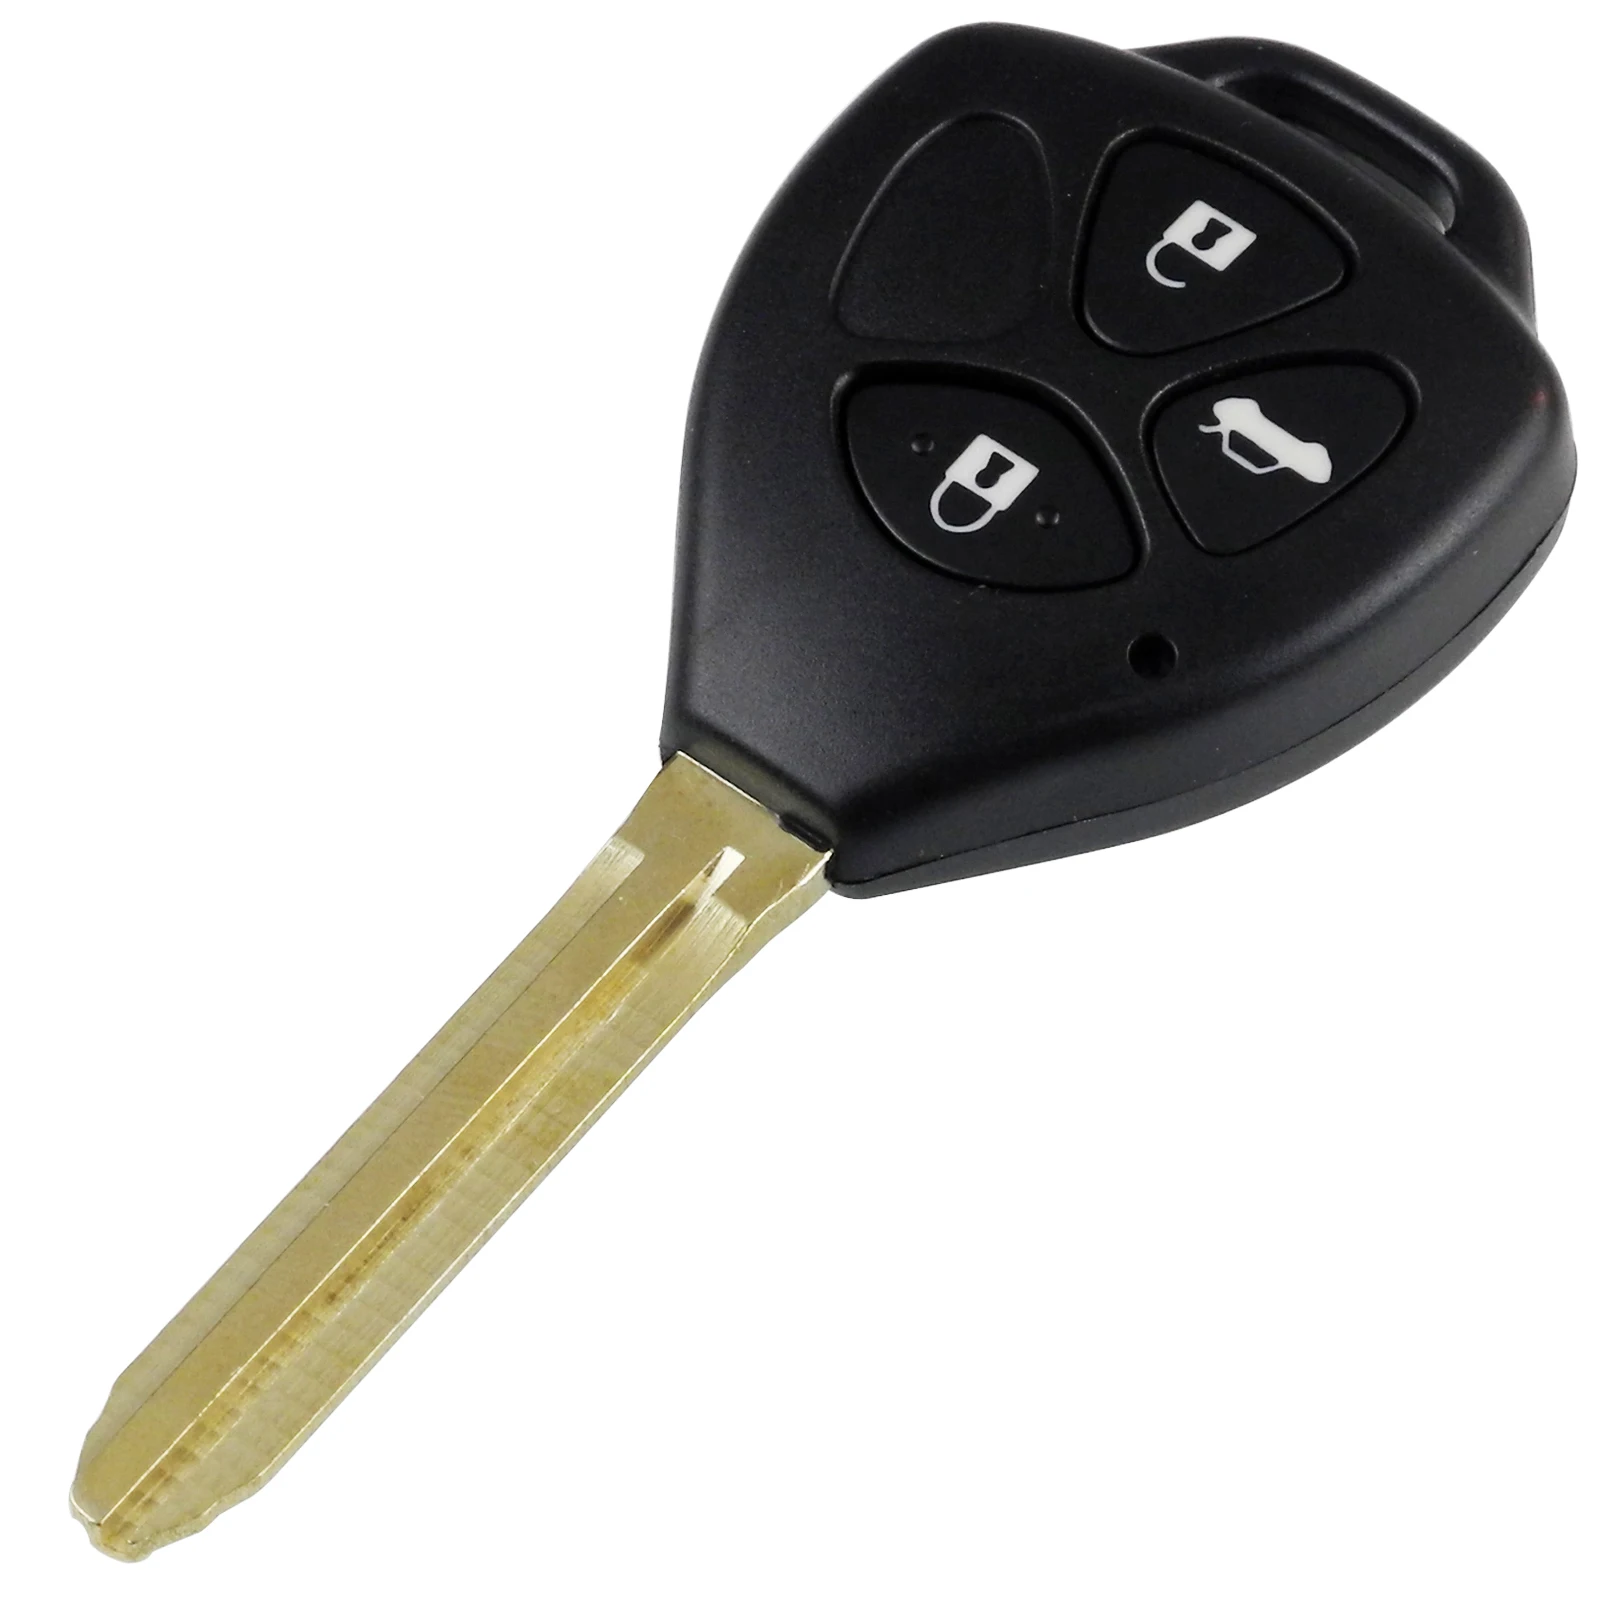 Jingyuqin 2/3/4 BTN чехол для дистанционного ключа от машины в виде ракушки для Toyota Yaris Prado Tarago Camry Corolla RAV4 REIZ корона Avalon Venza TOY43 франко-борт